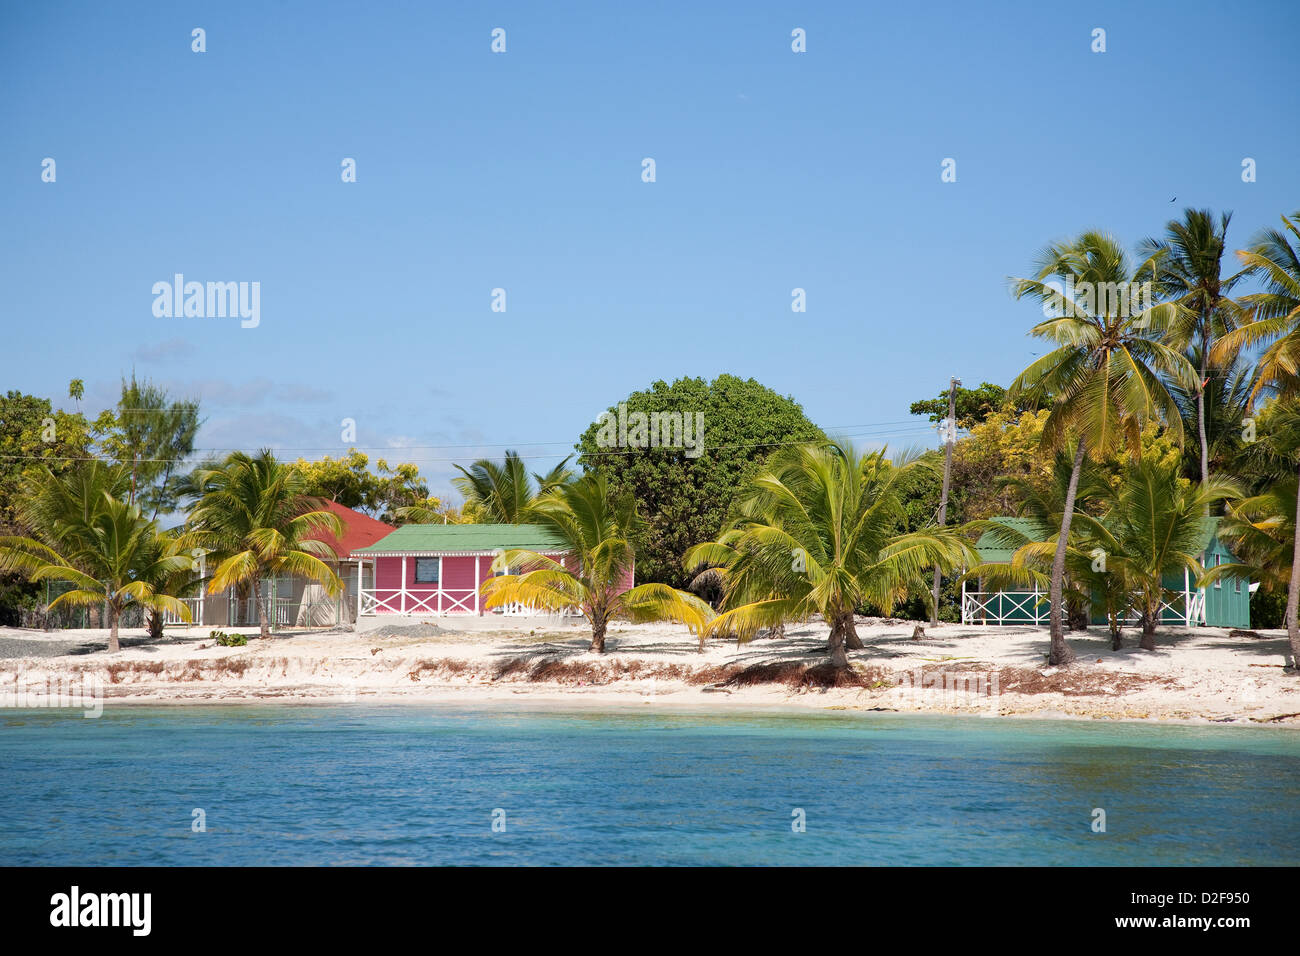 america, caribbean sea, hispaniola island, dominican republic, saona island, sea and beach with palms Stock Photo